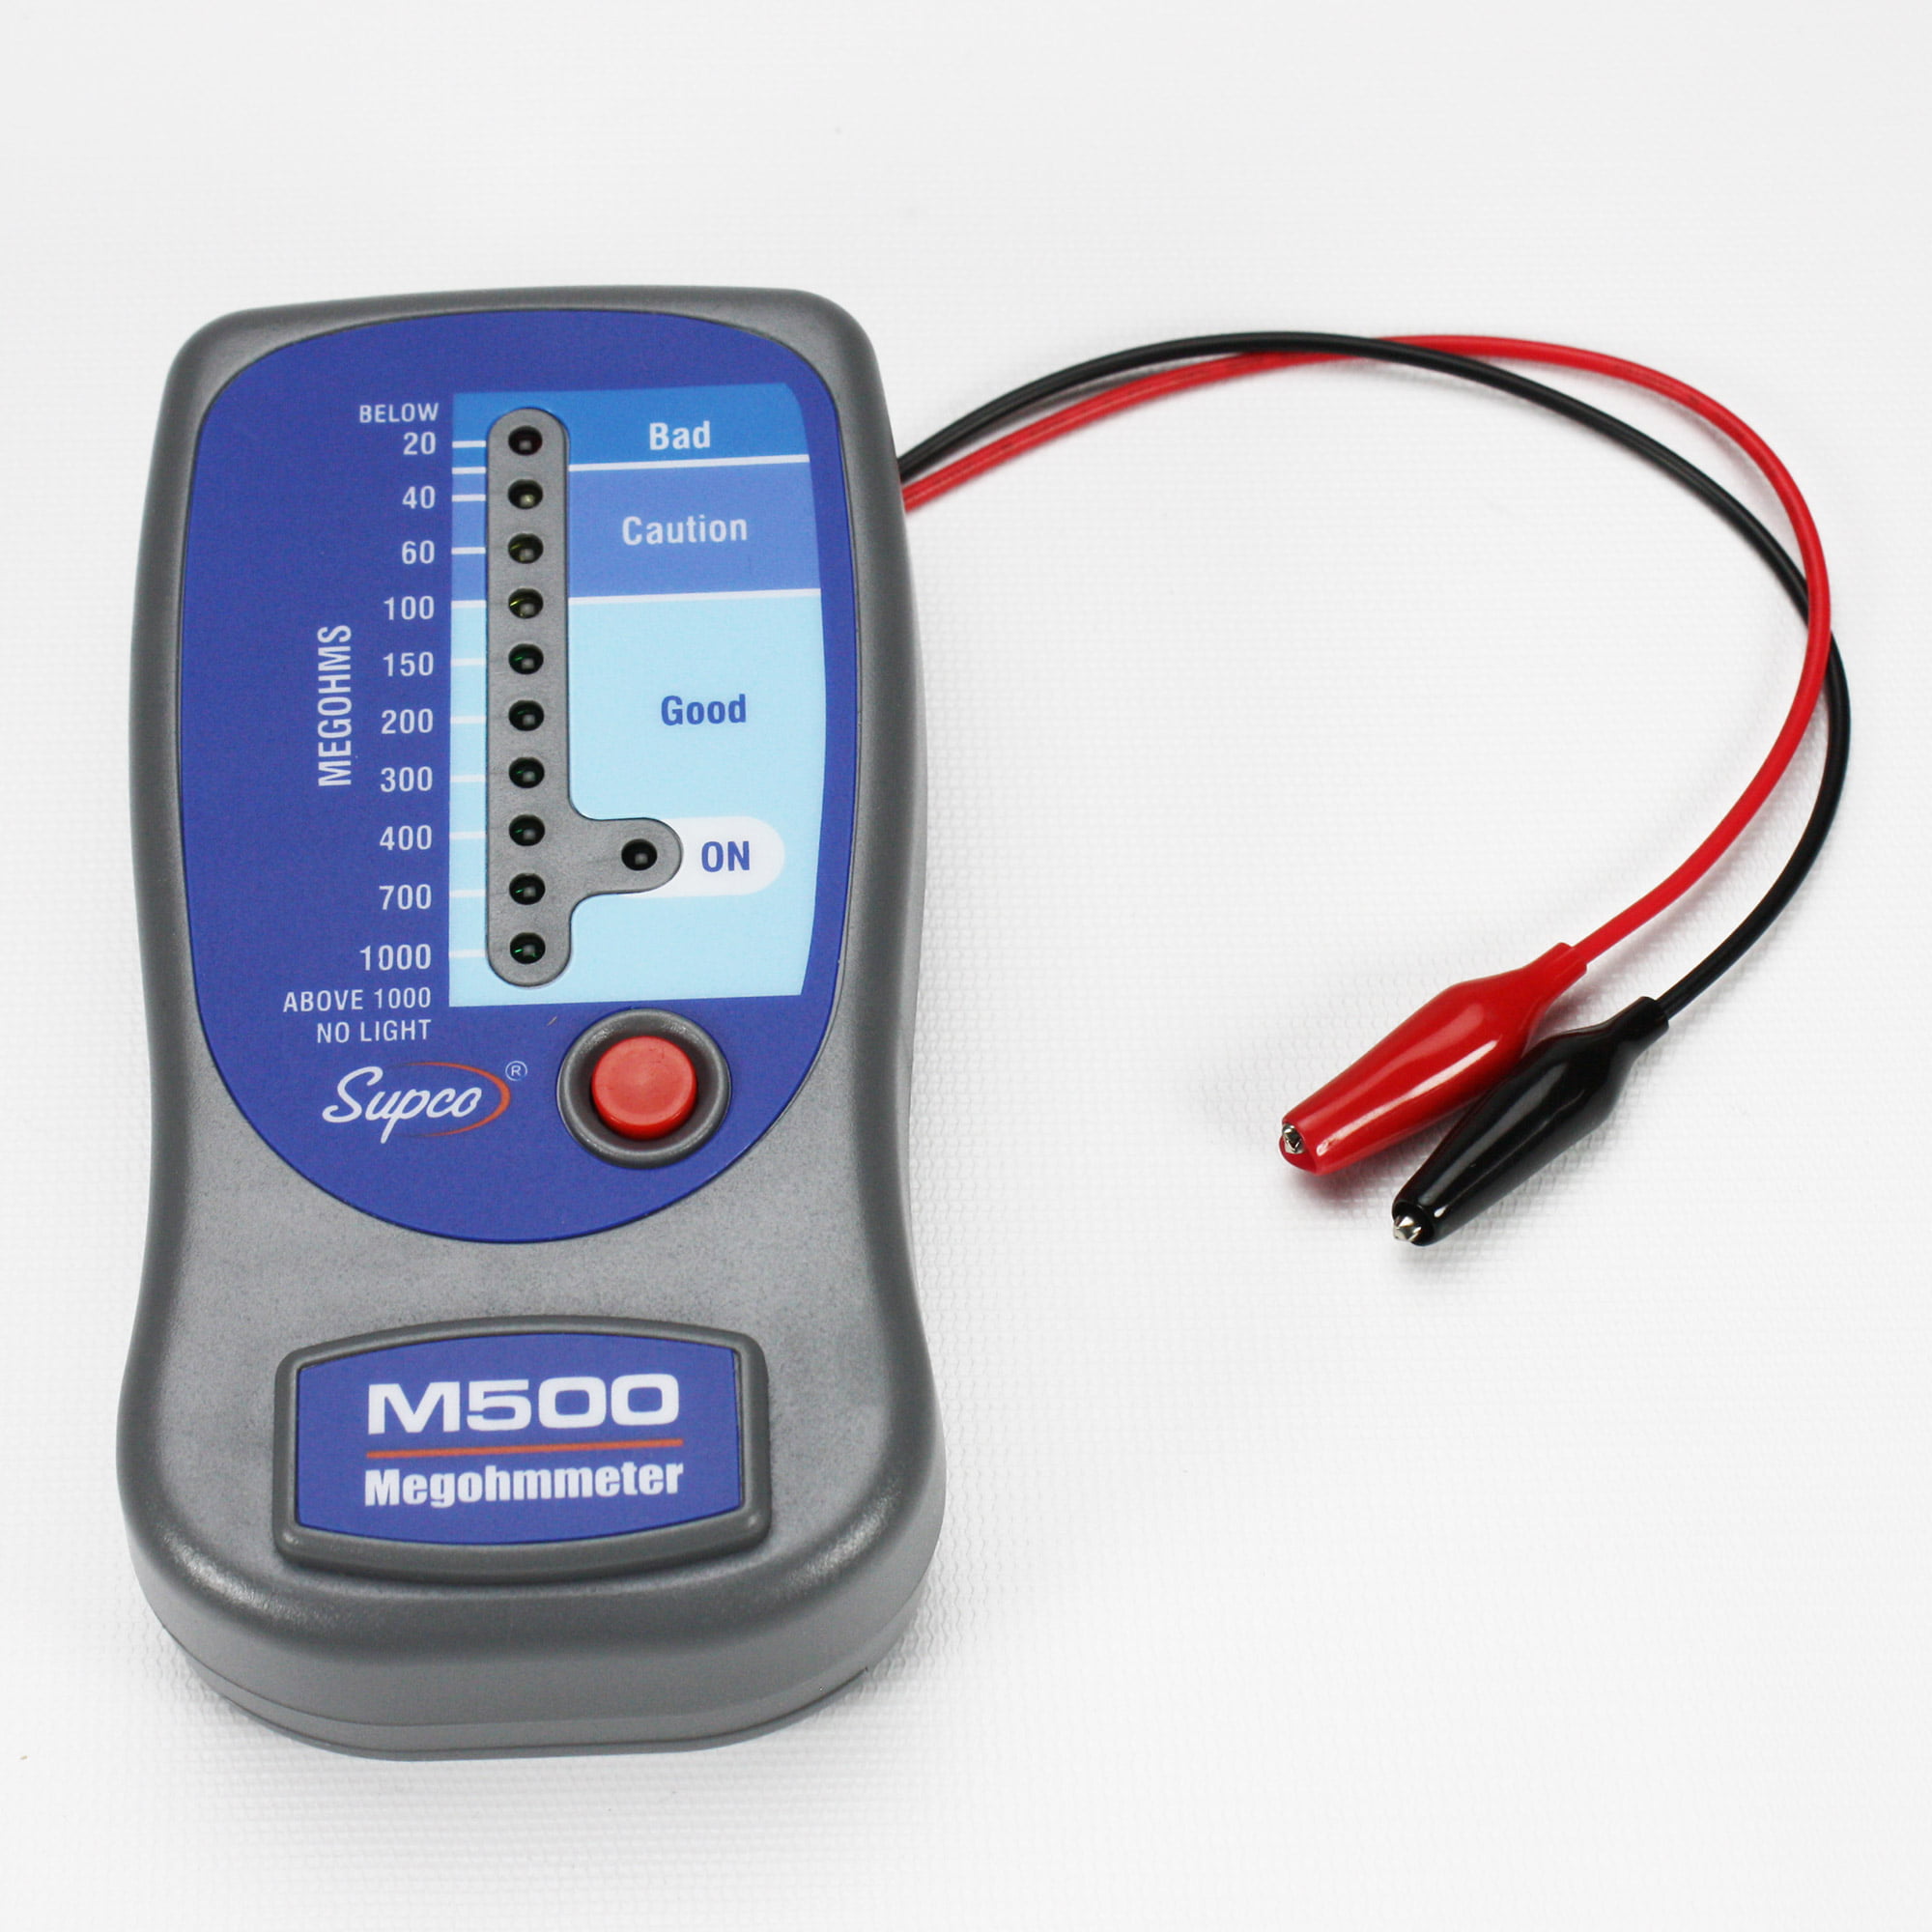 0 to 1000 megohms SUPCO M500 Insulation Tester/Electronic Megohmmeter with Case 